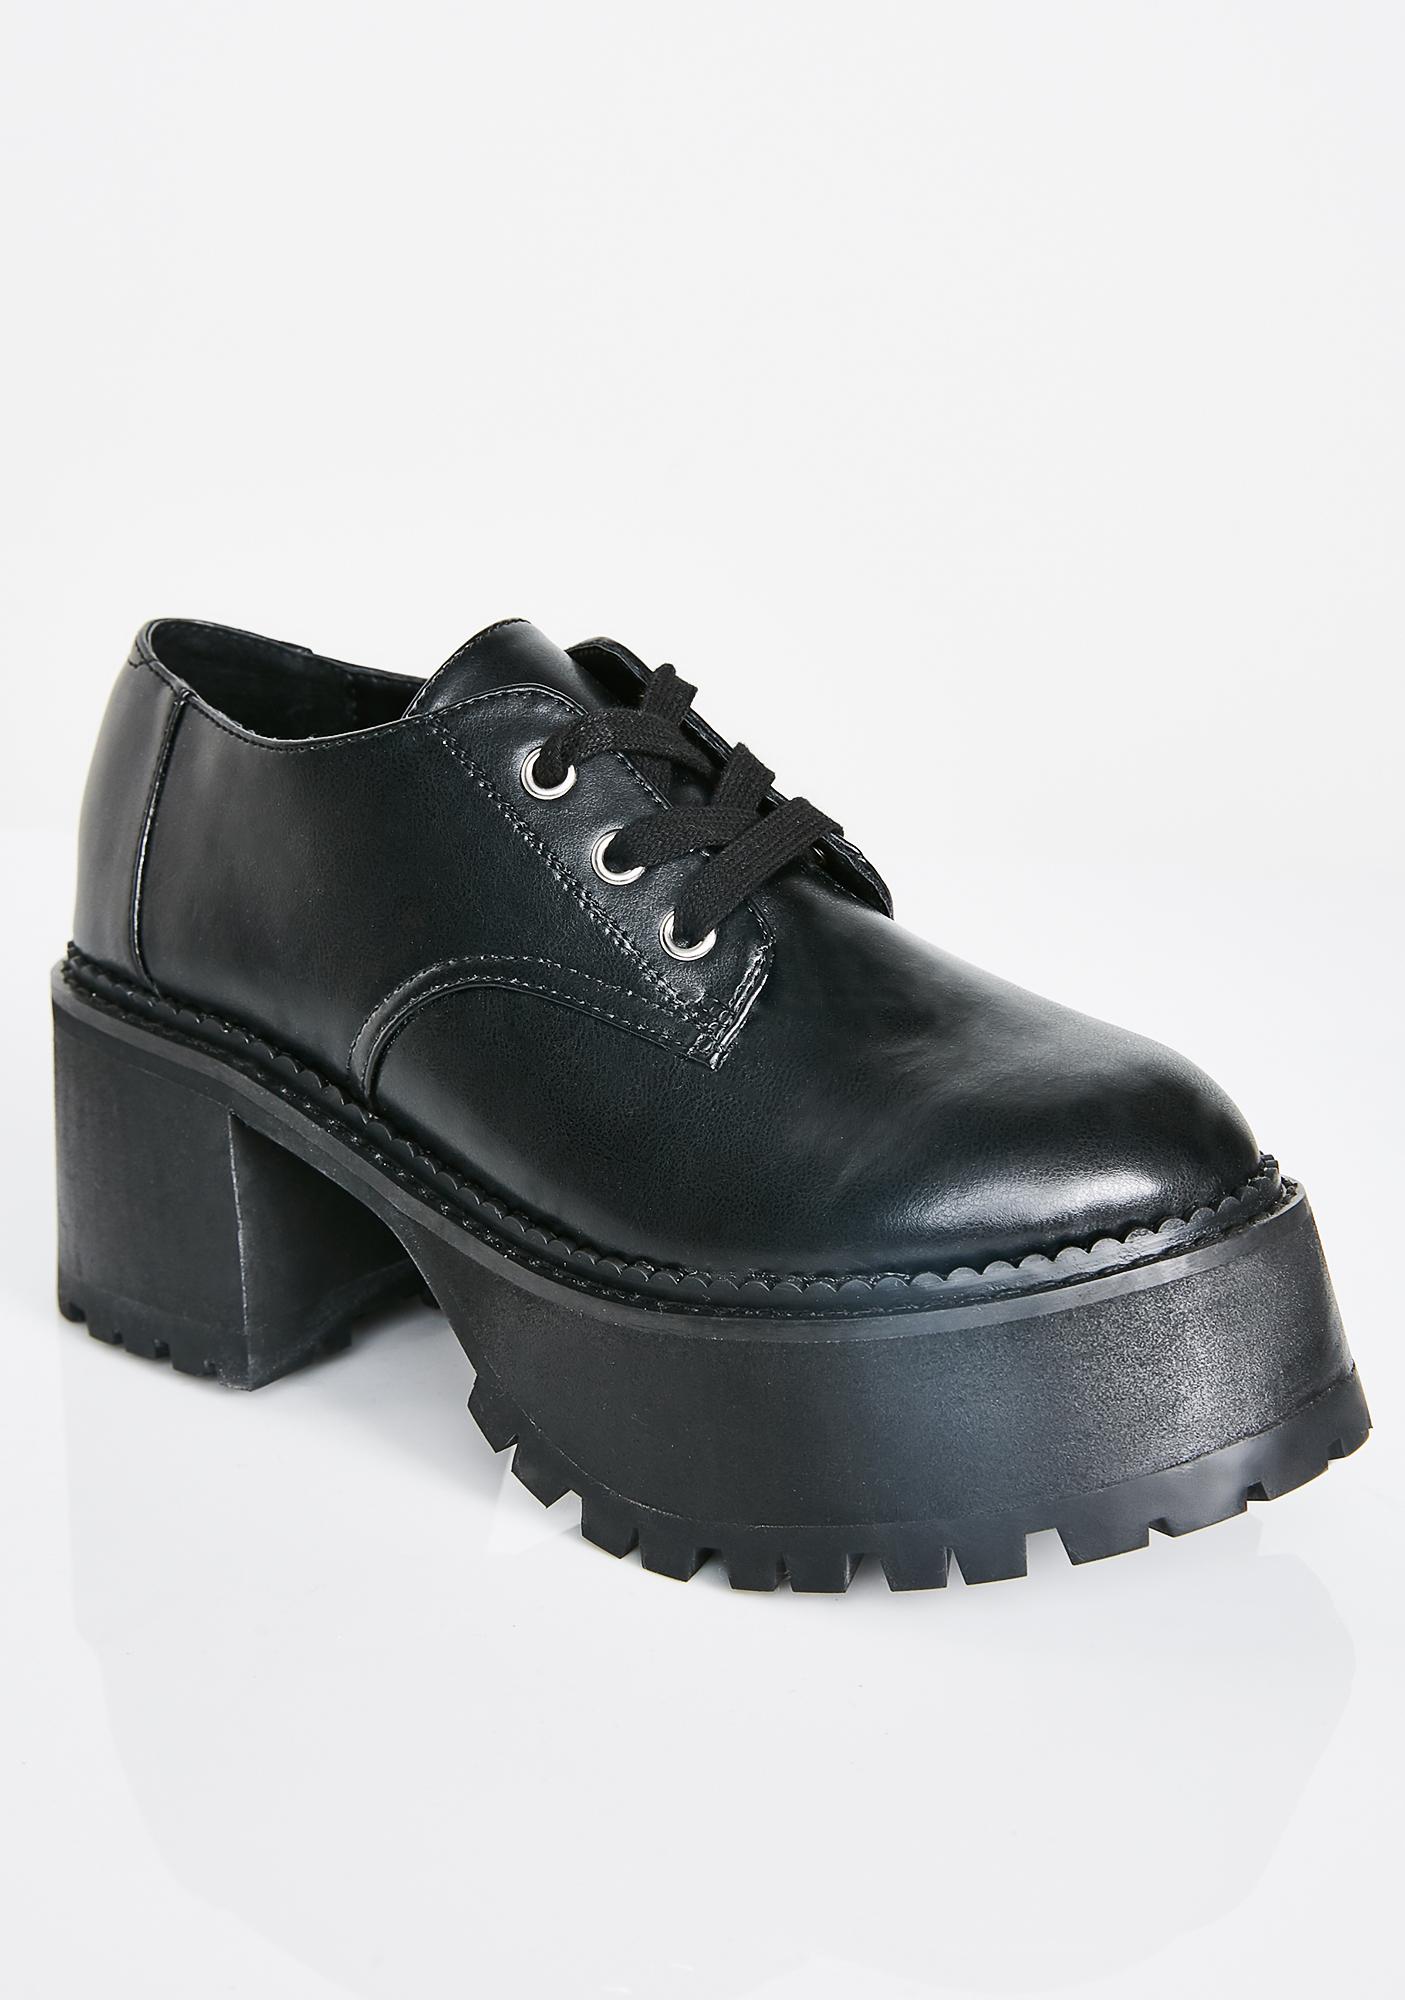 90s platform school shoes